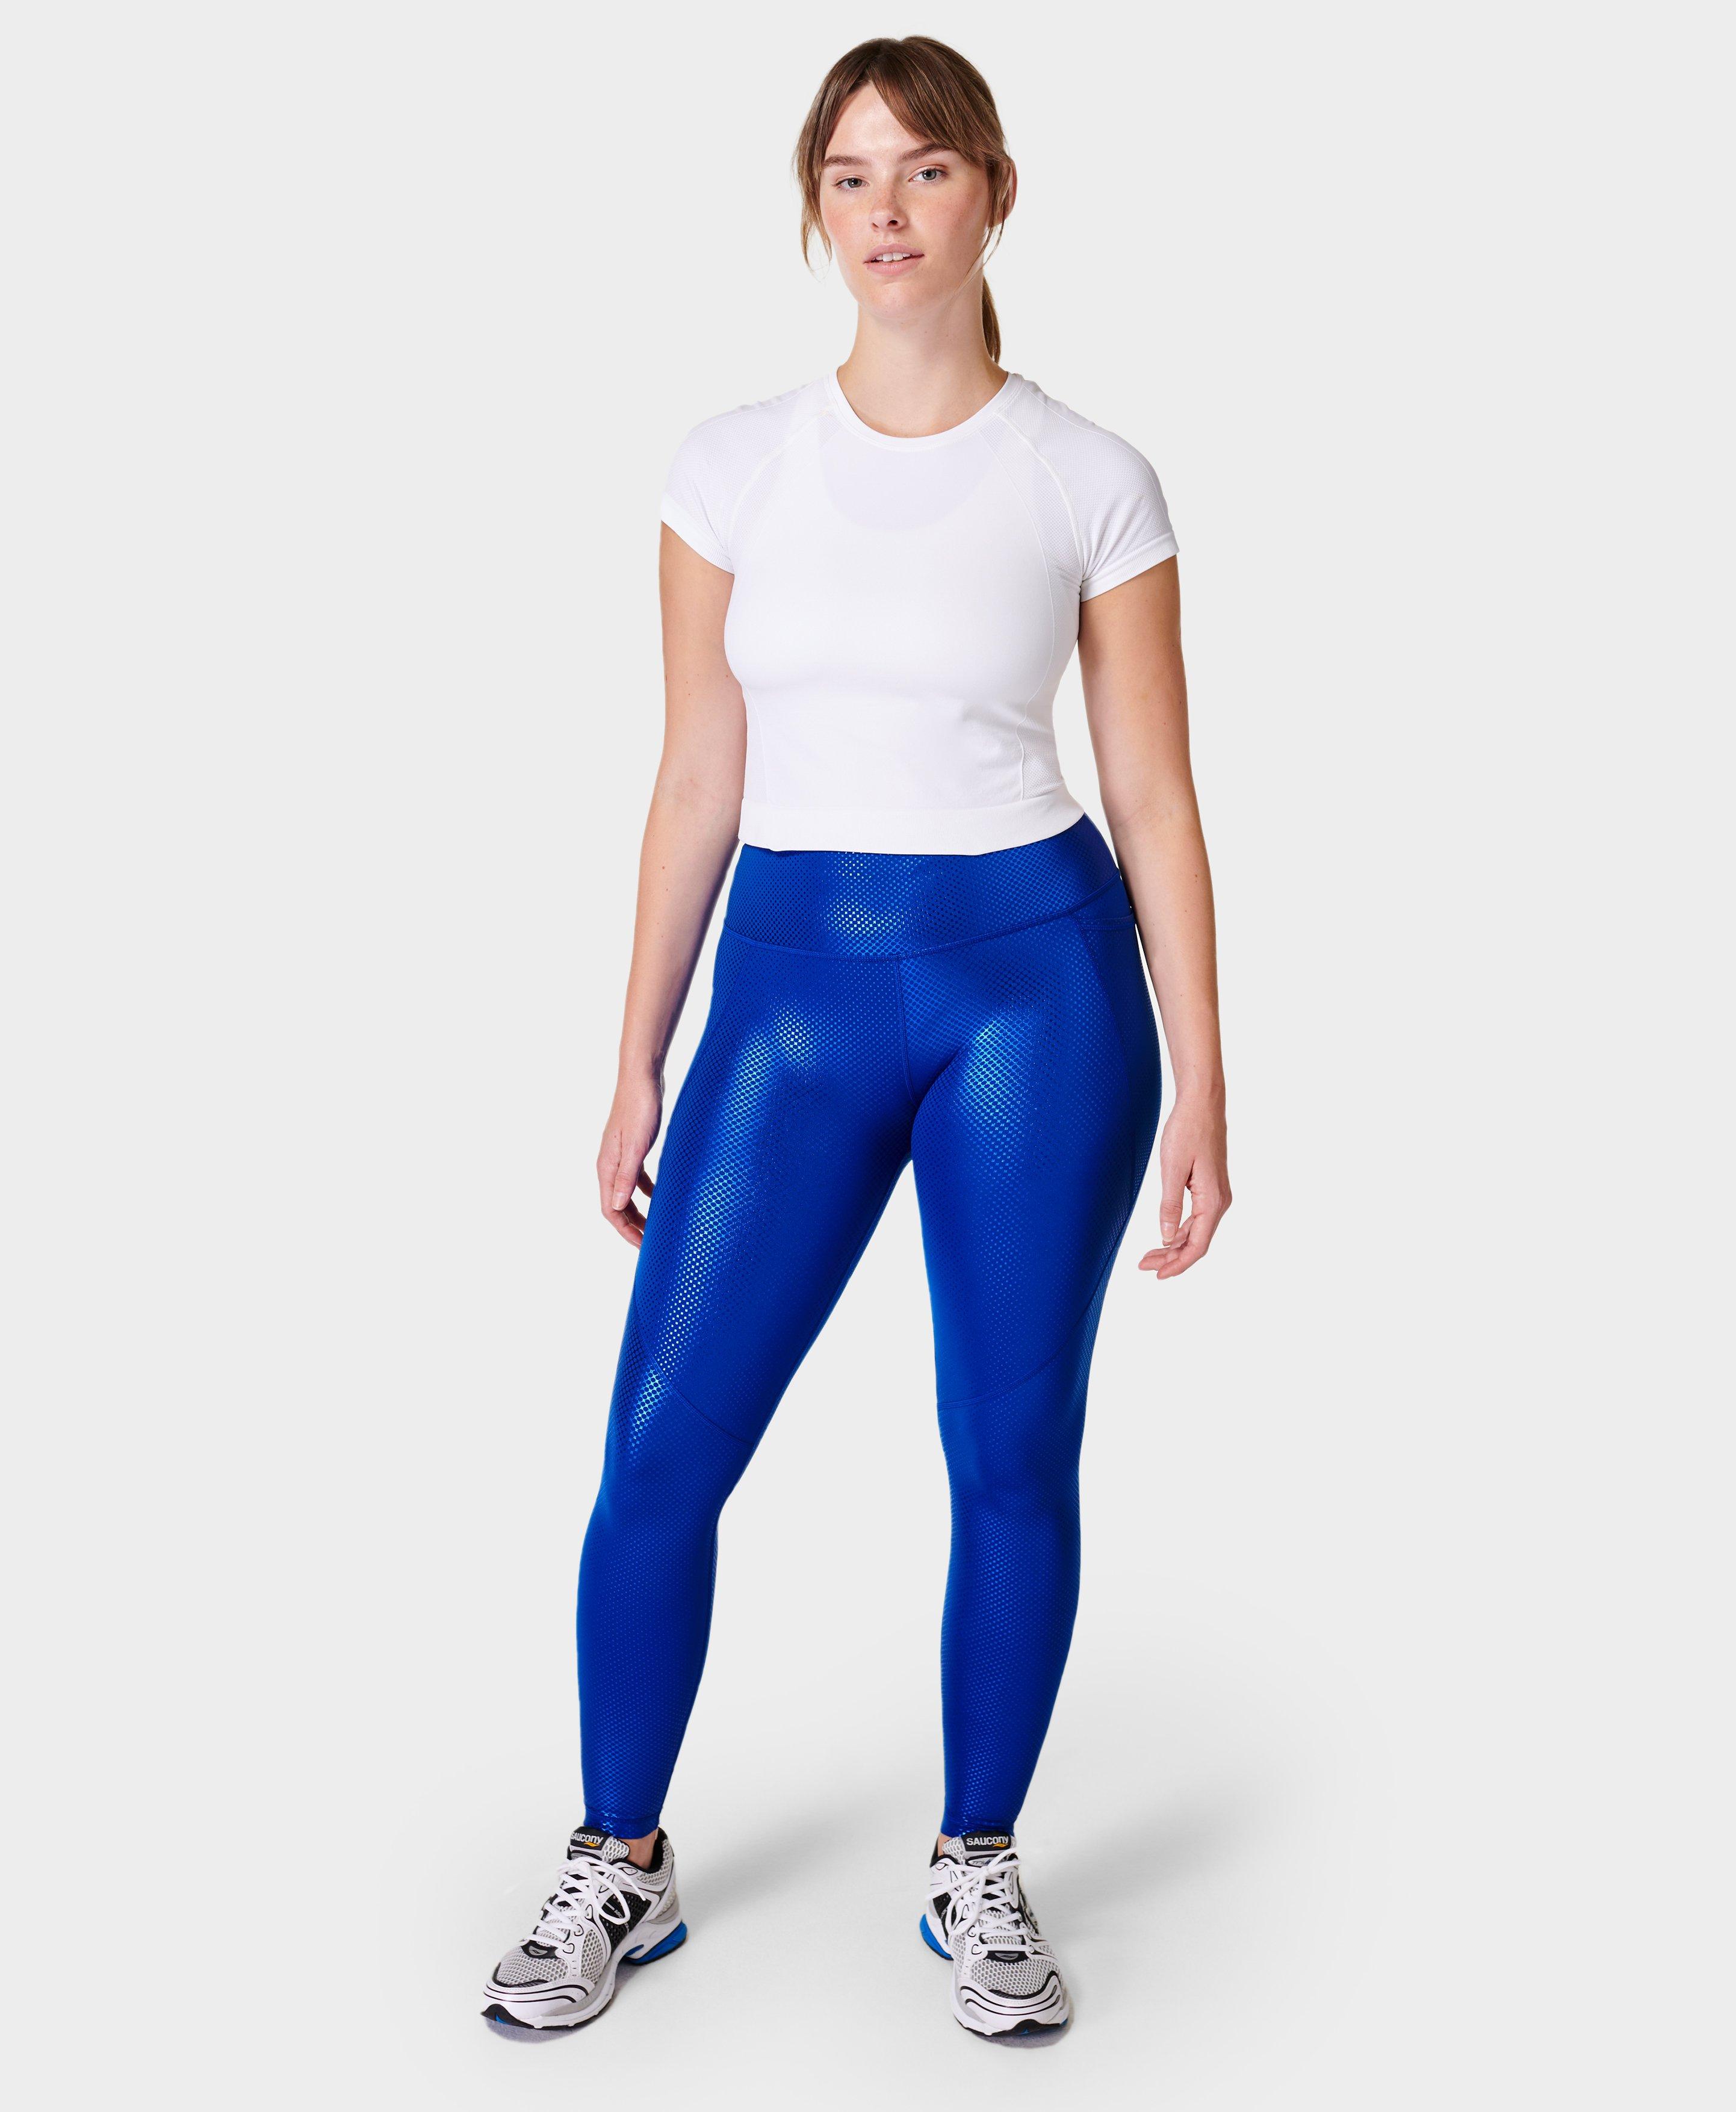 Power Gym Leggings - Blue Gradient Tiger Print, Women's Leggings